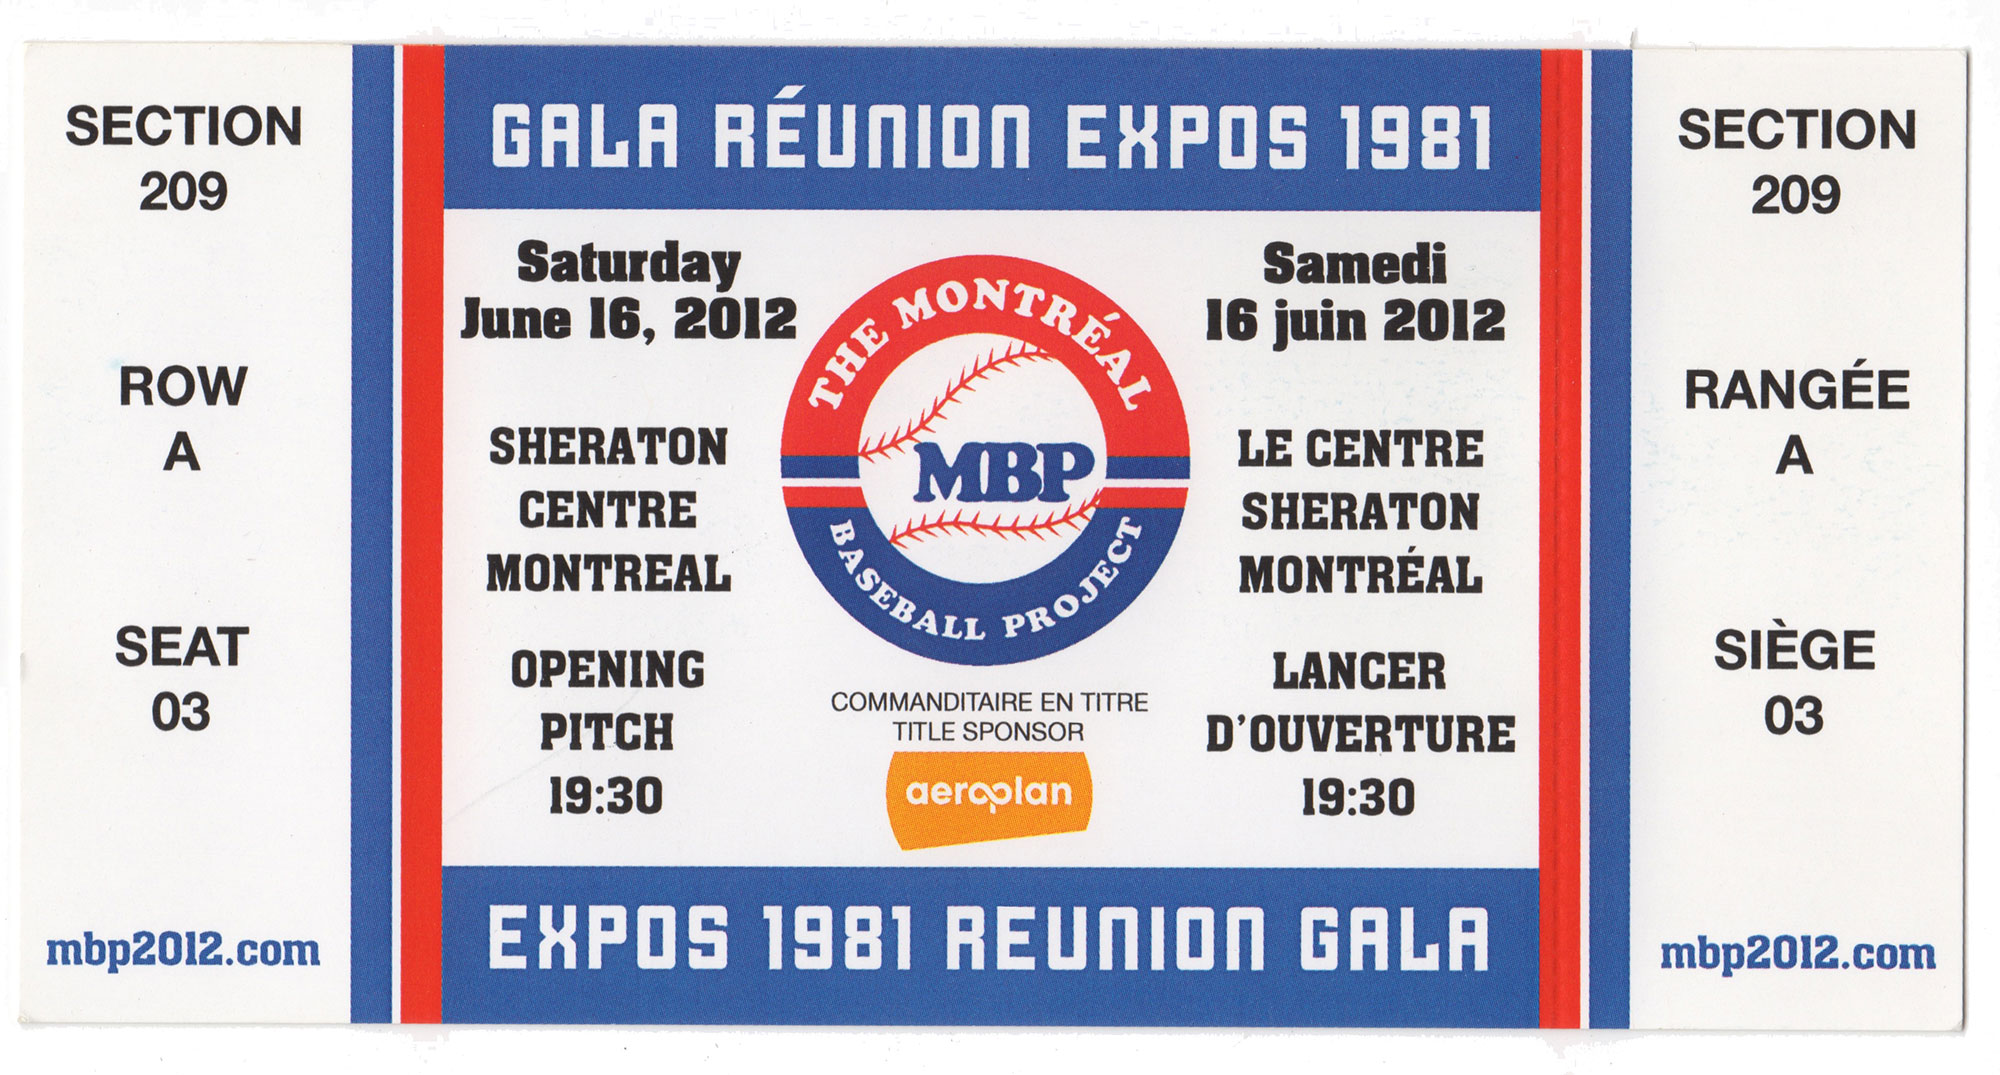 Montreal Baseball Project Expos 1981 Reunion Gala